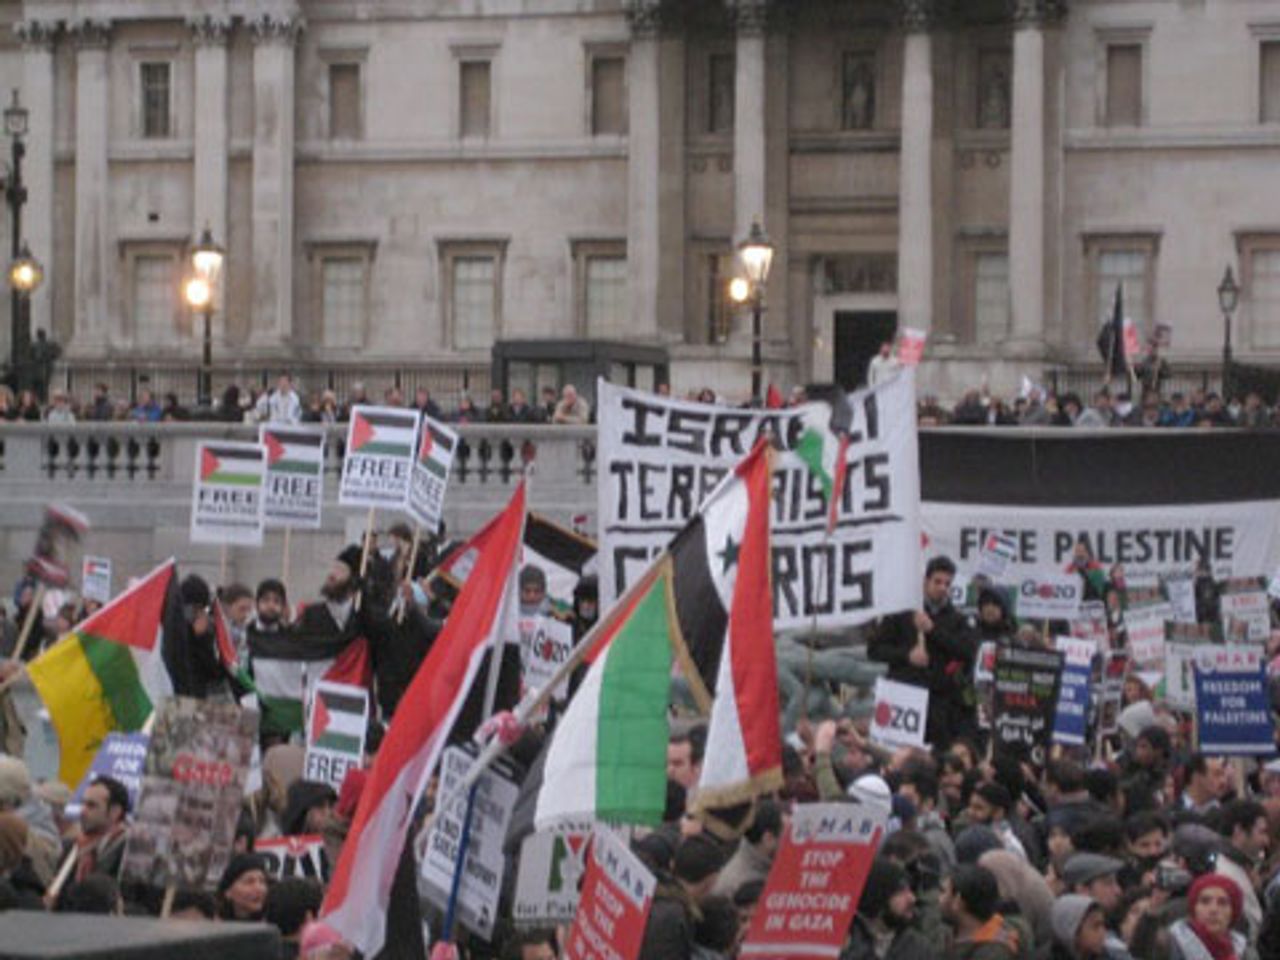 London demonstration